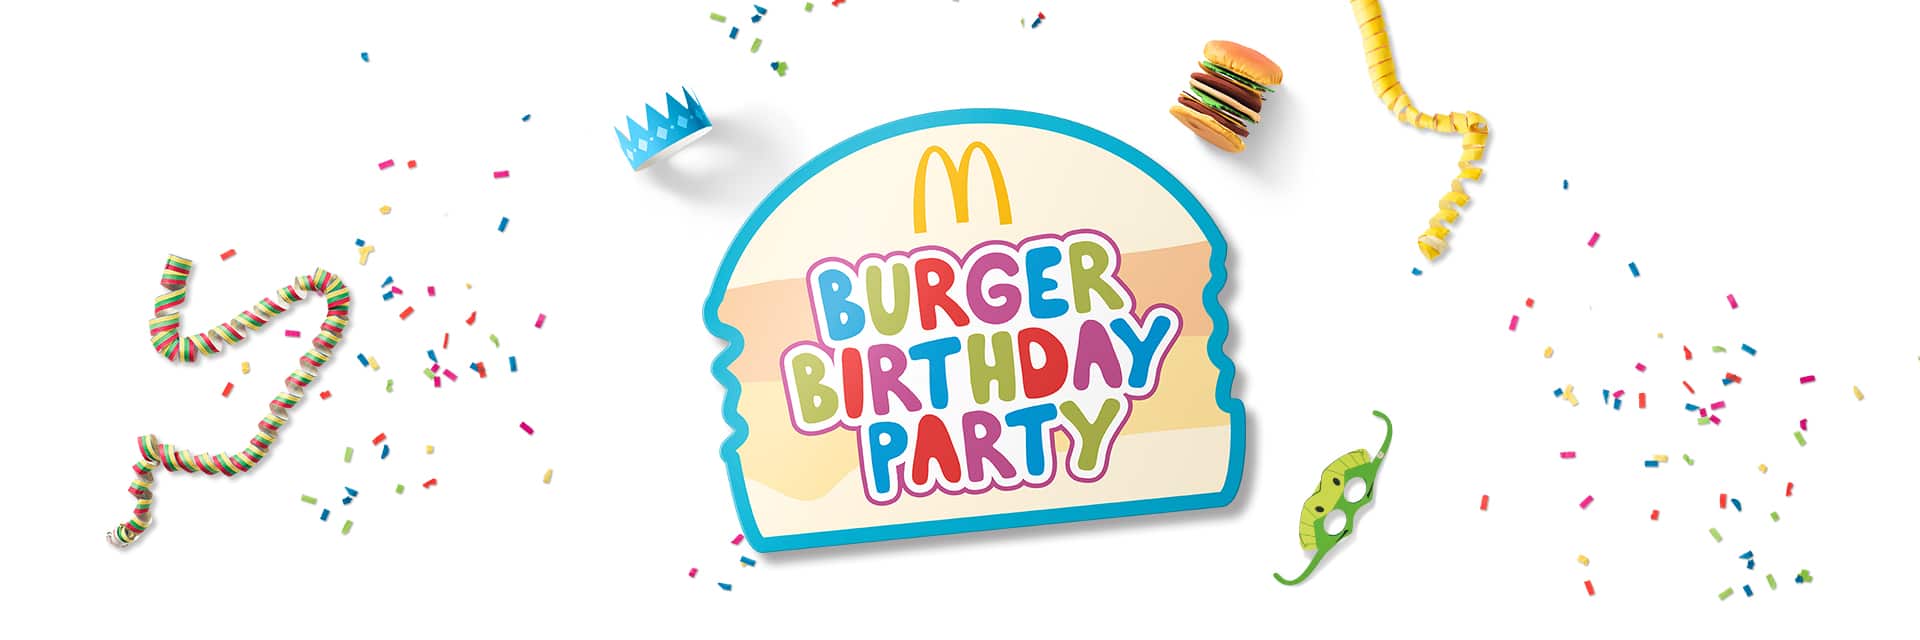 Burger Birthday Party